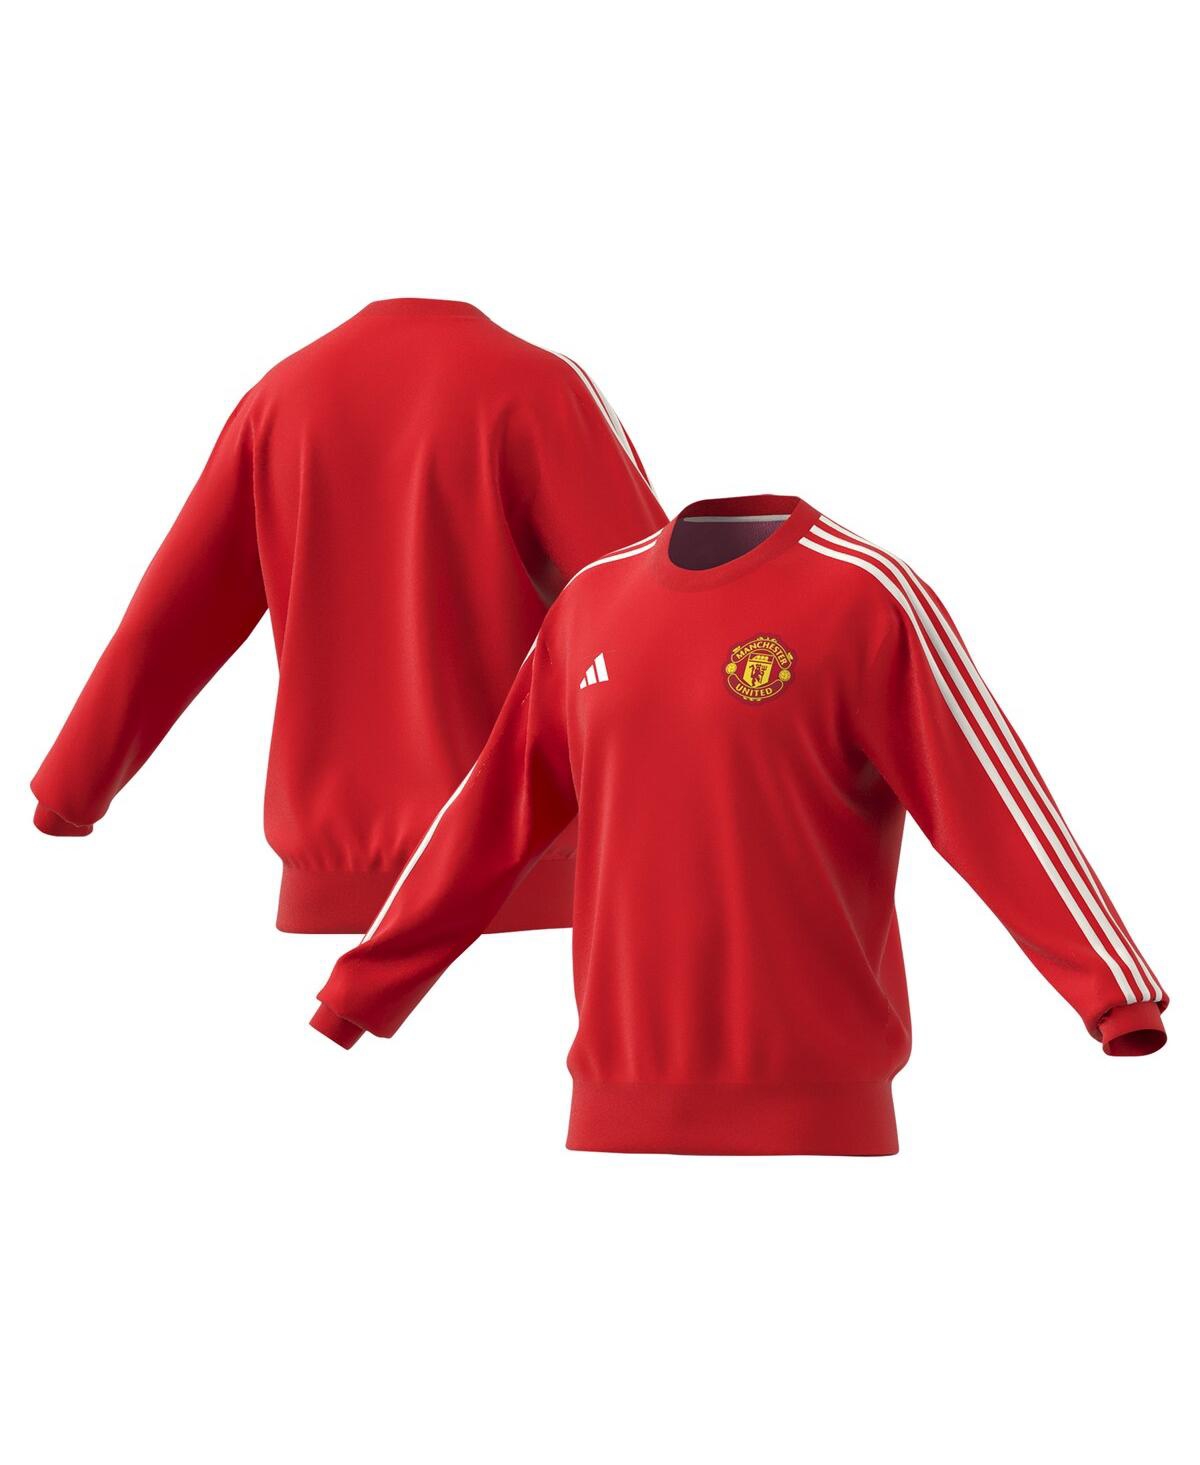 Adidas Originals Men's Red Manchester United Dna Pullover Sweatshirt